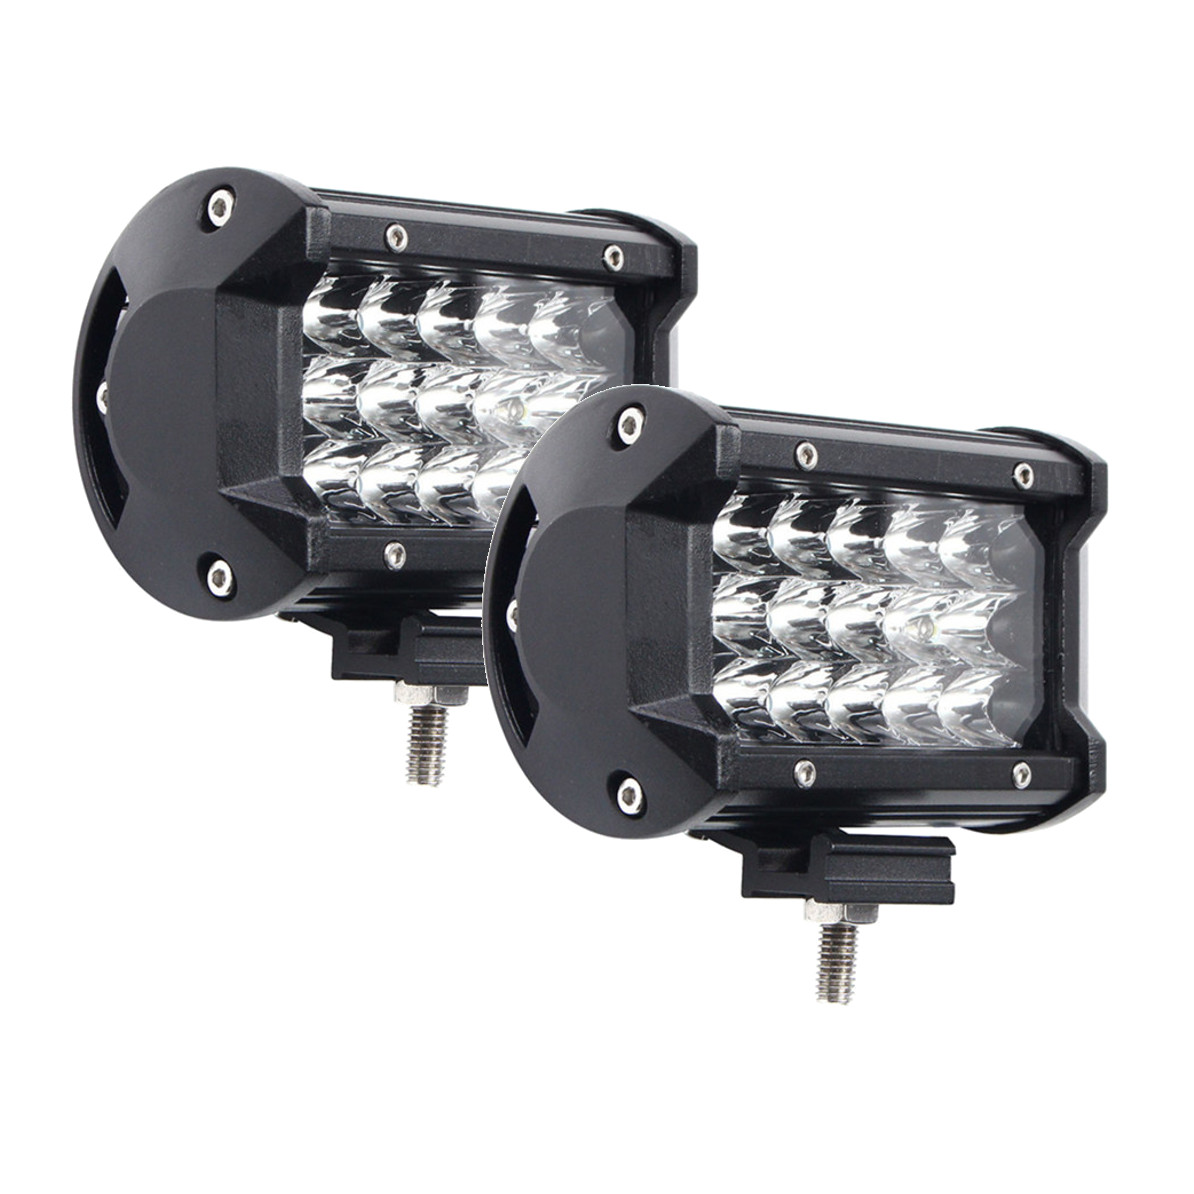 

5 Inch 36W LED Work Light Bar Spot Beam IP67 10-30V Super White 2PCS for Jeep Off Road Truck Boat